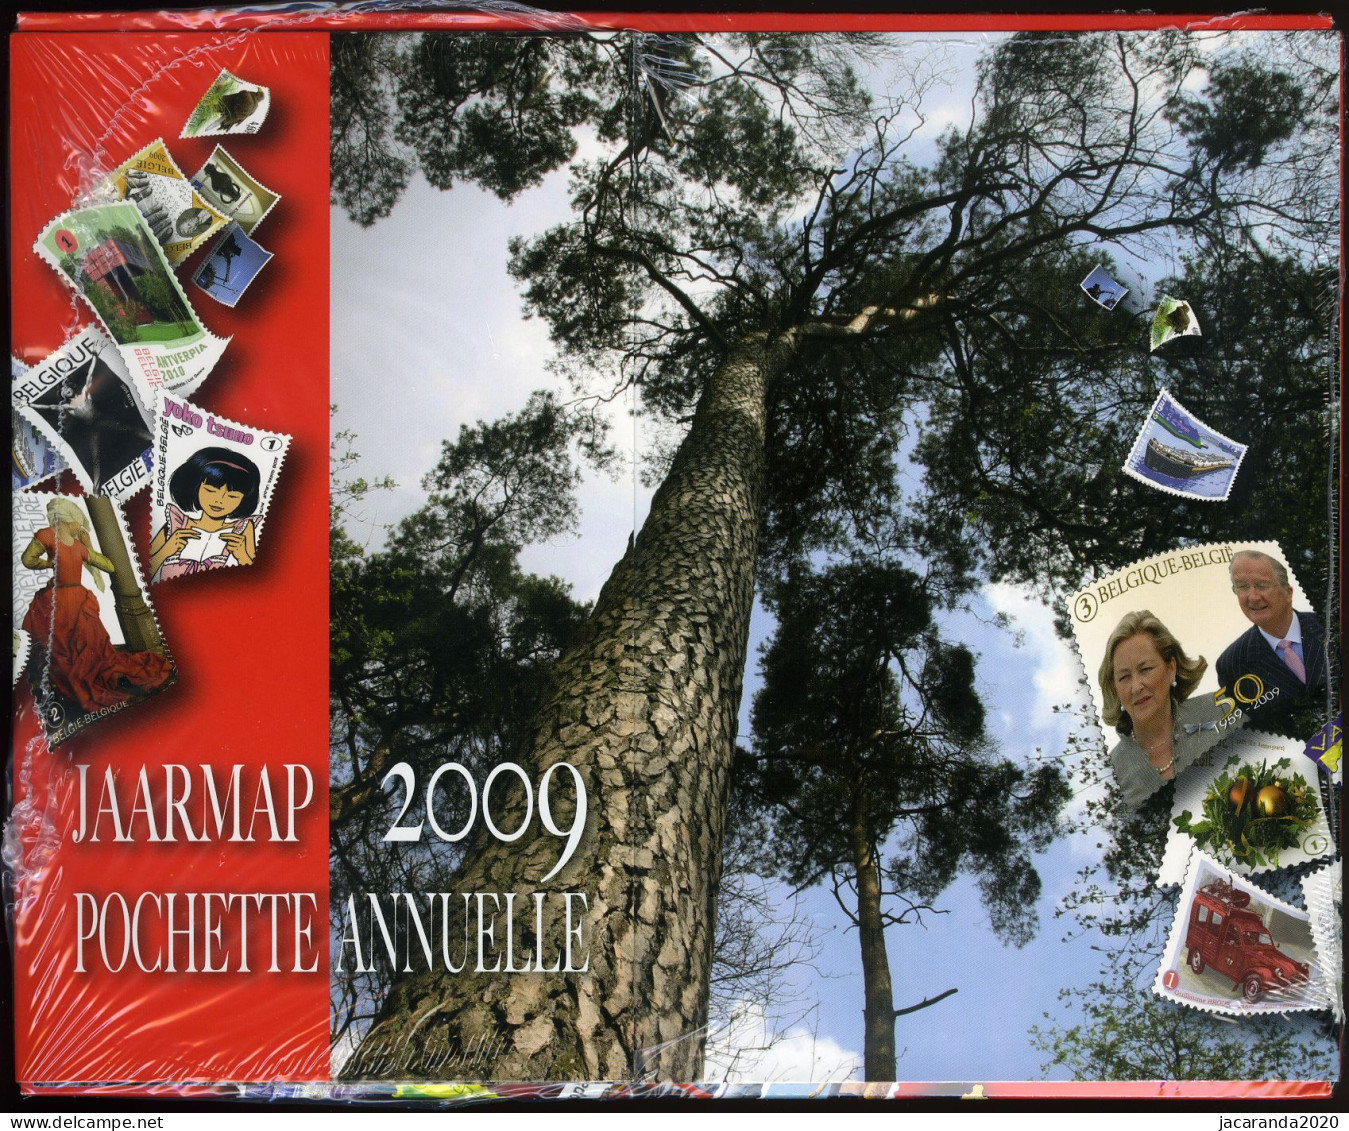 België 2009 - Jaarmap - Pochette Annuelle - Met Zwart-wit Velletje Van Europa - Originele Verpakking - Scellé - Sealed - Années Complètes